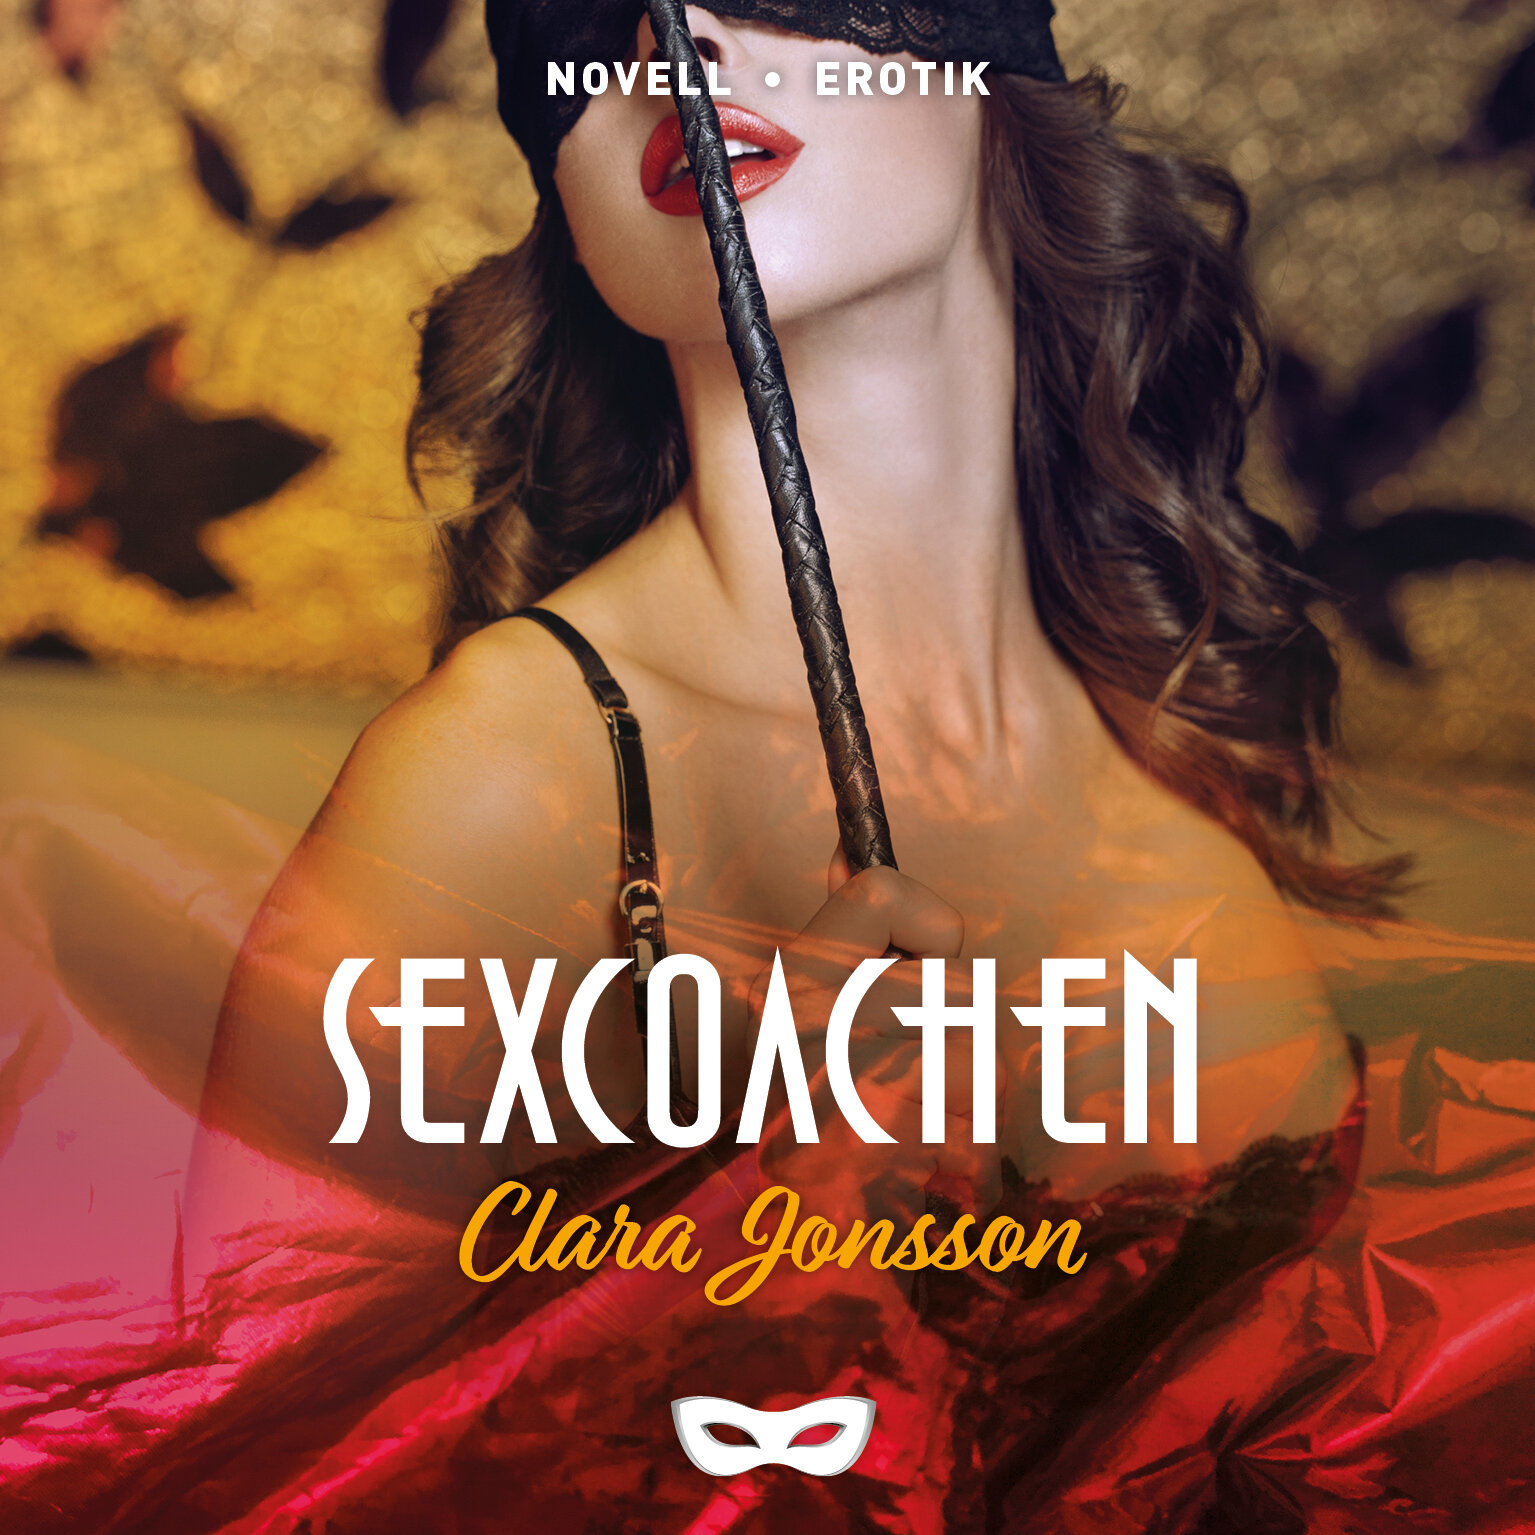 DIRTY4 Clara Jonsson Sexcoachen omslag audio.jpg